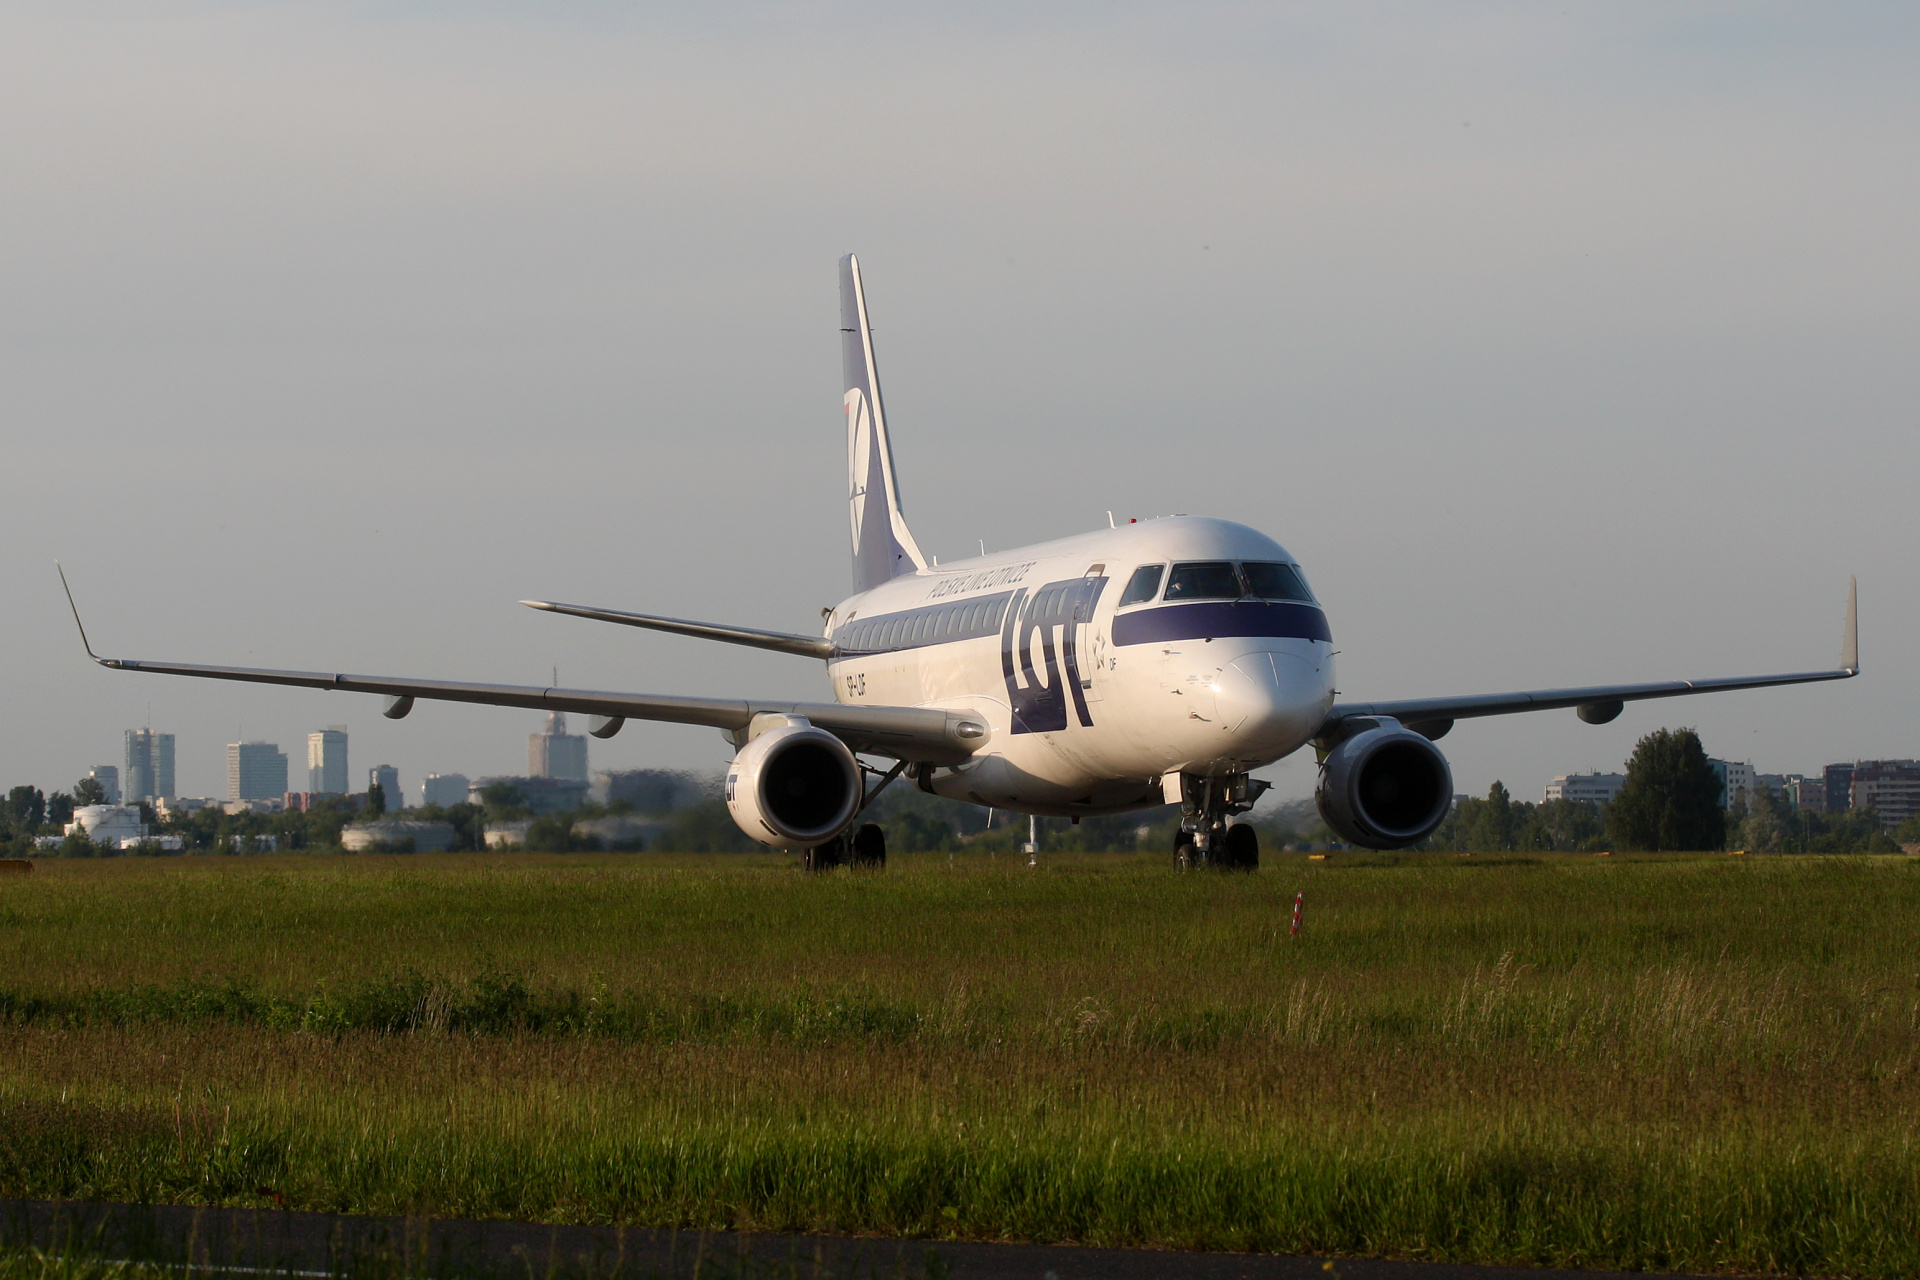 SP-LDF (Aircraft » EPWA Spotting » Embraer E170 » LOT Polish Airlines)